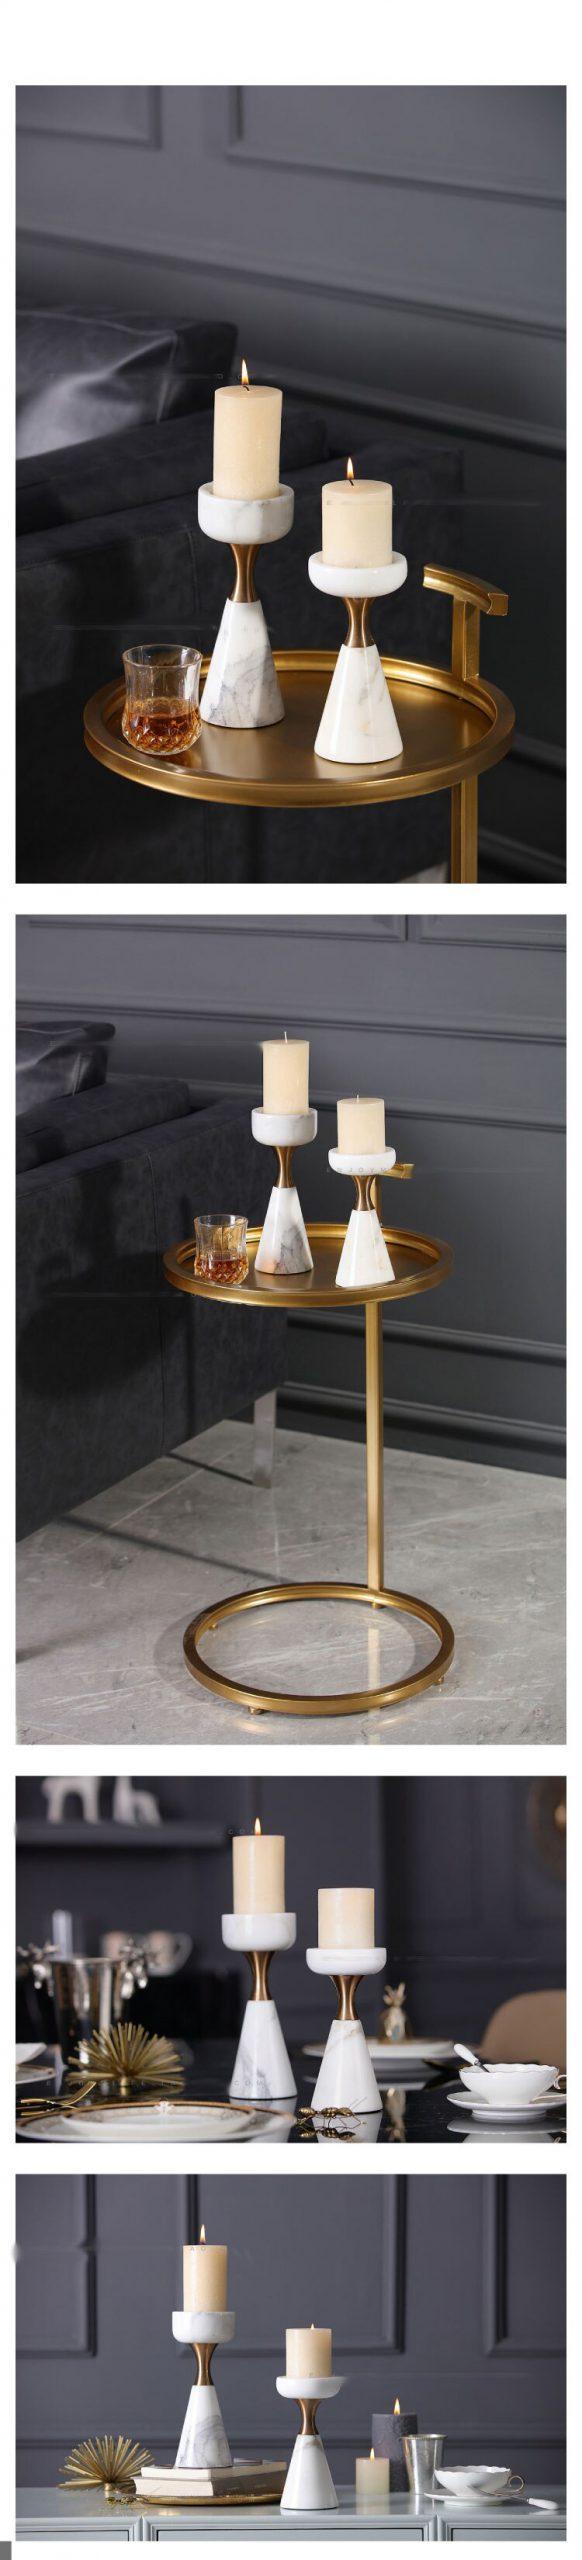 Luxurious Romantic White Marble Candlestick Gold Metal Candlestick Tealight Holder Wedding Table Centerpiece Decor Ornament